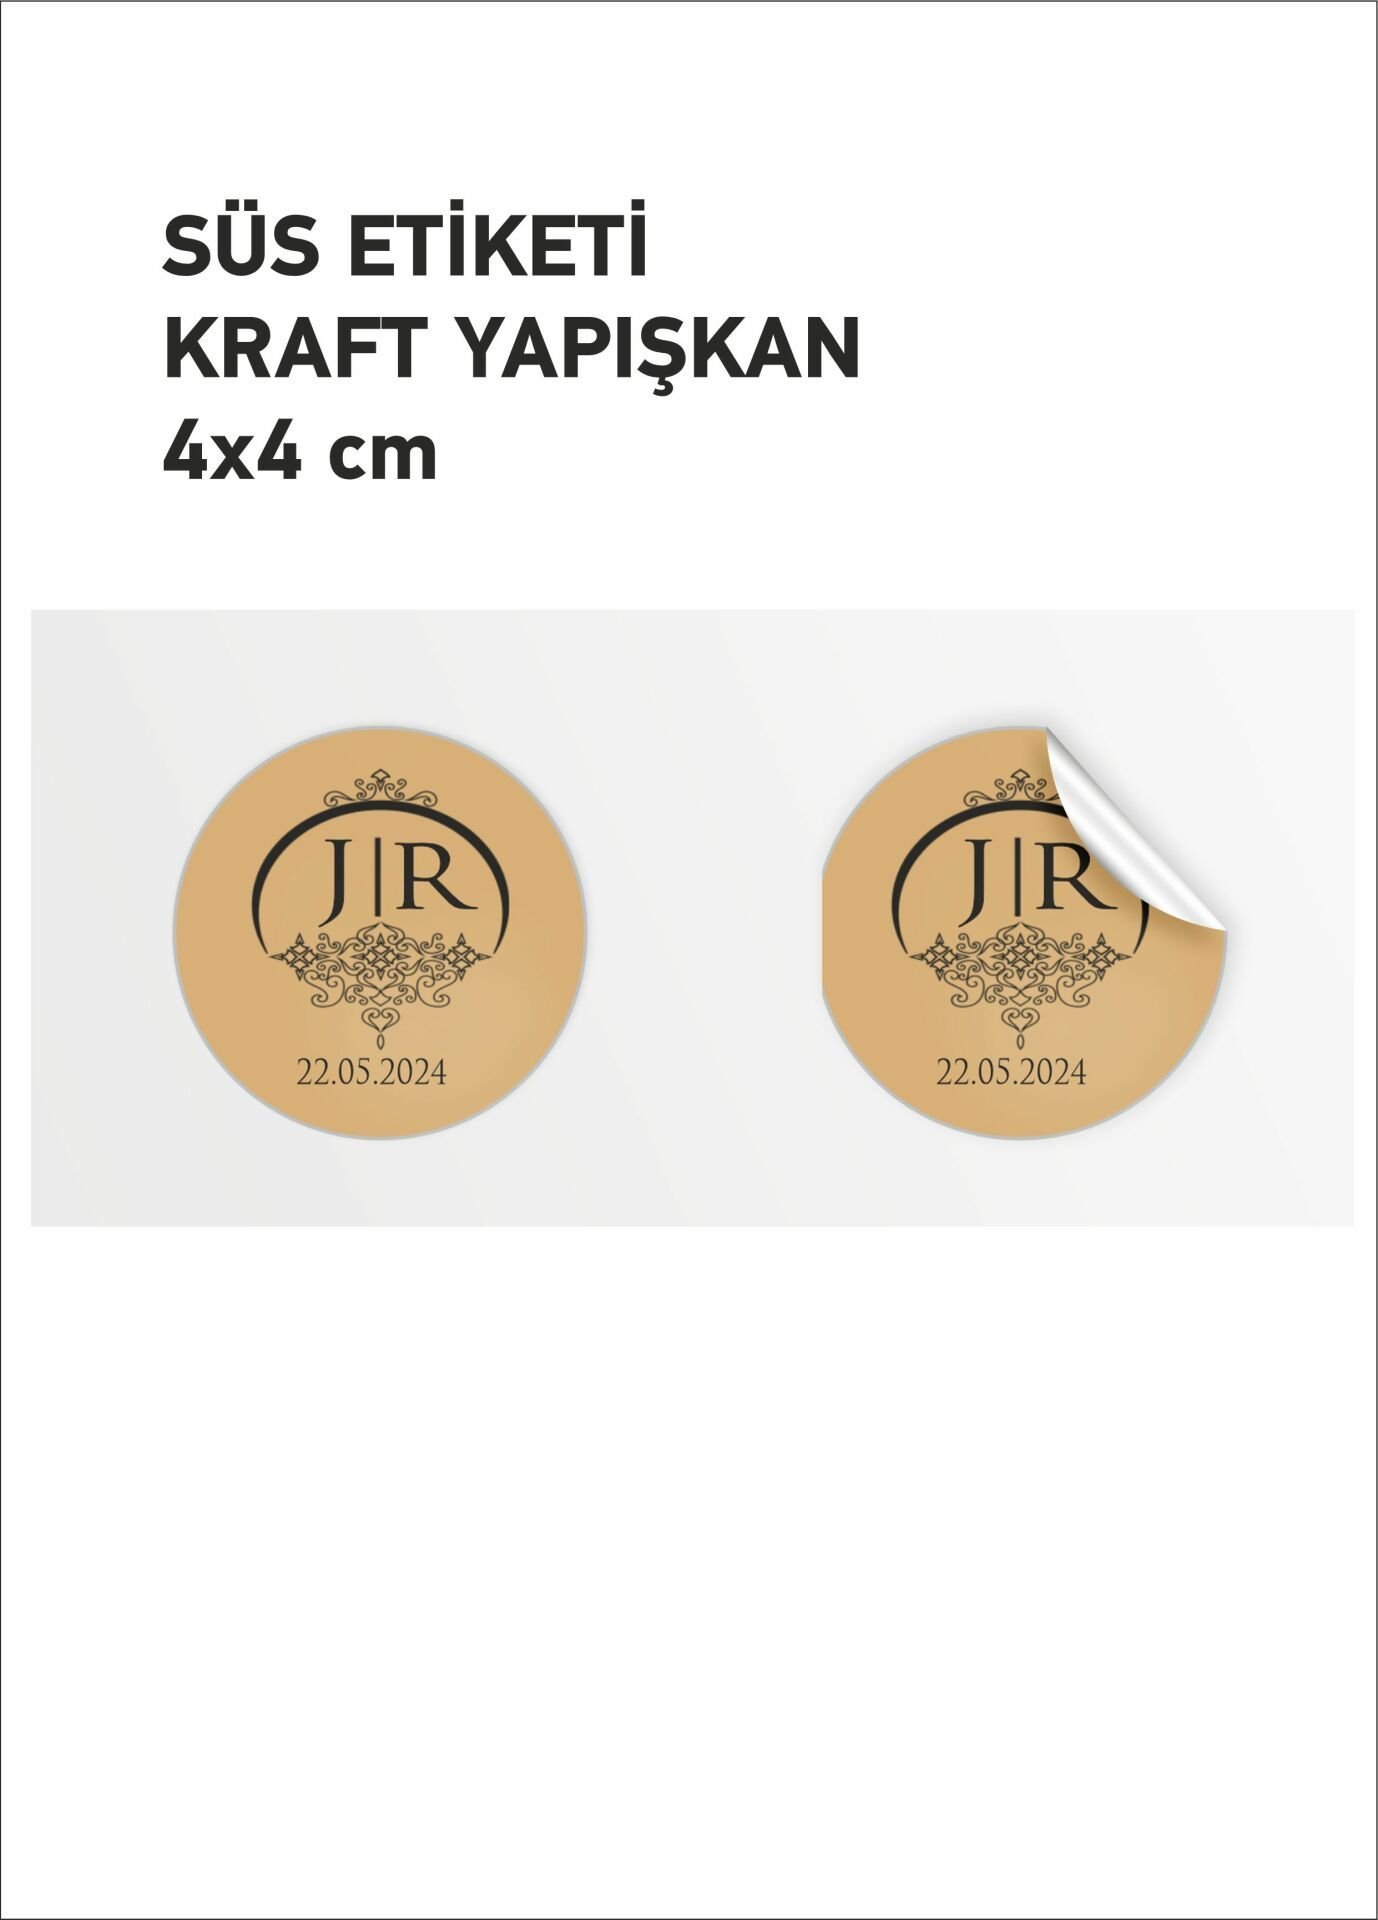 Kraft Etiket Sticker Süs Etiketi 48 Adet 4x4 Cm